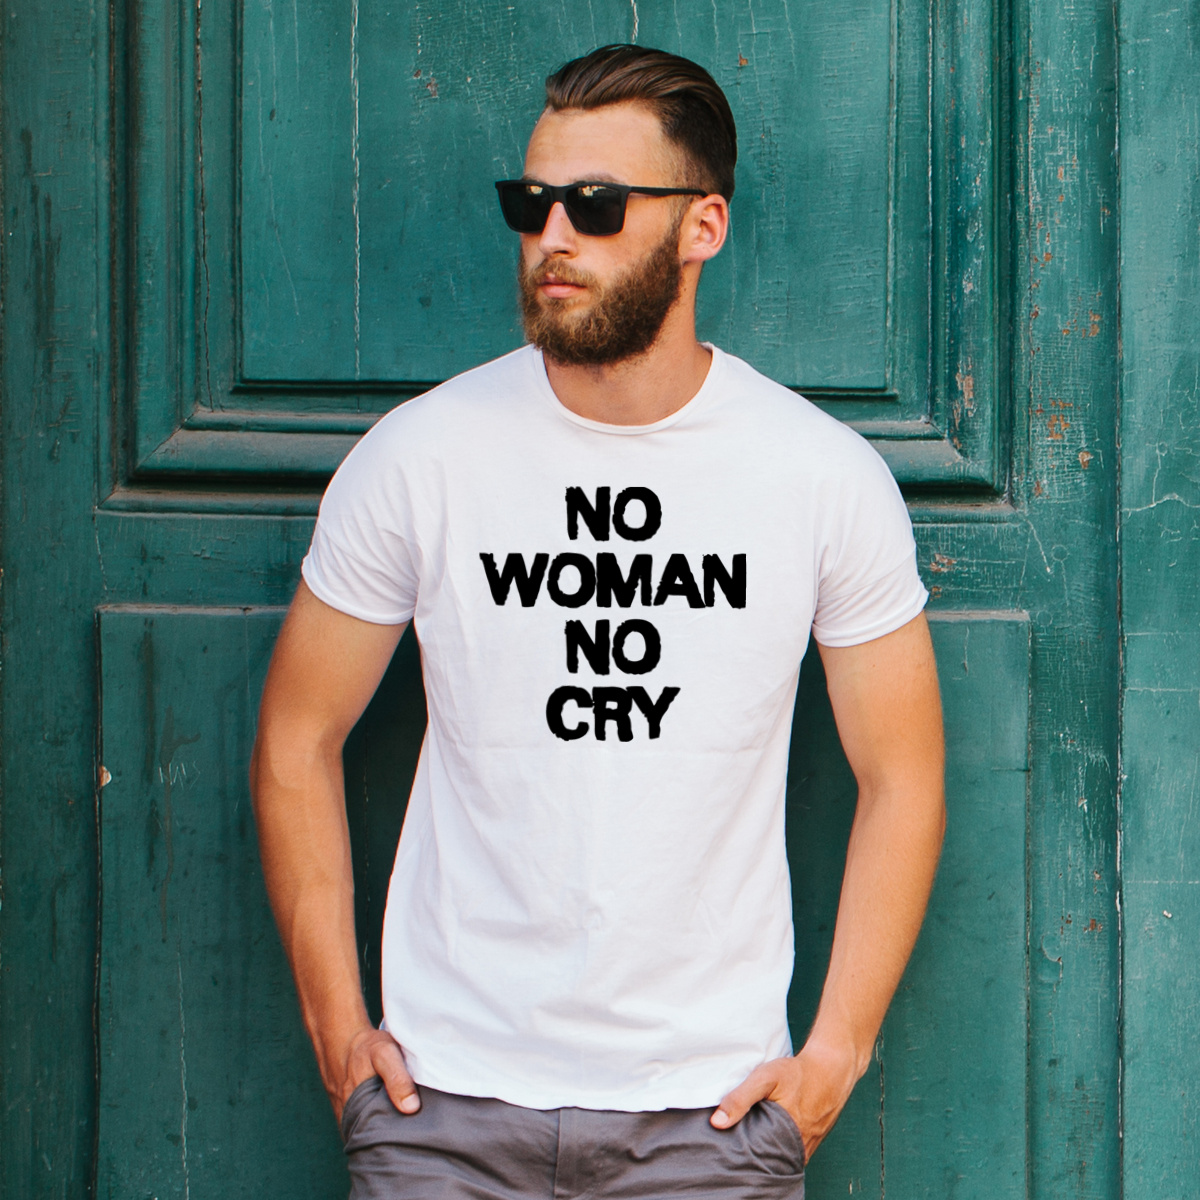 No woman no cry - Męska Koszulka Biała